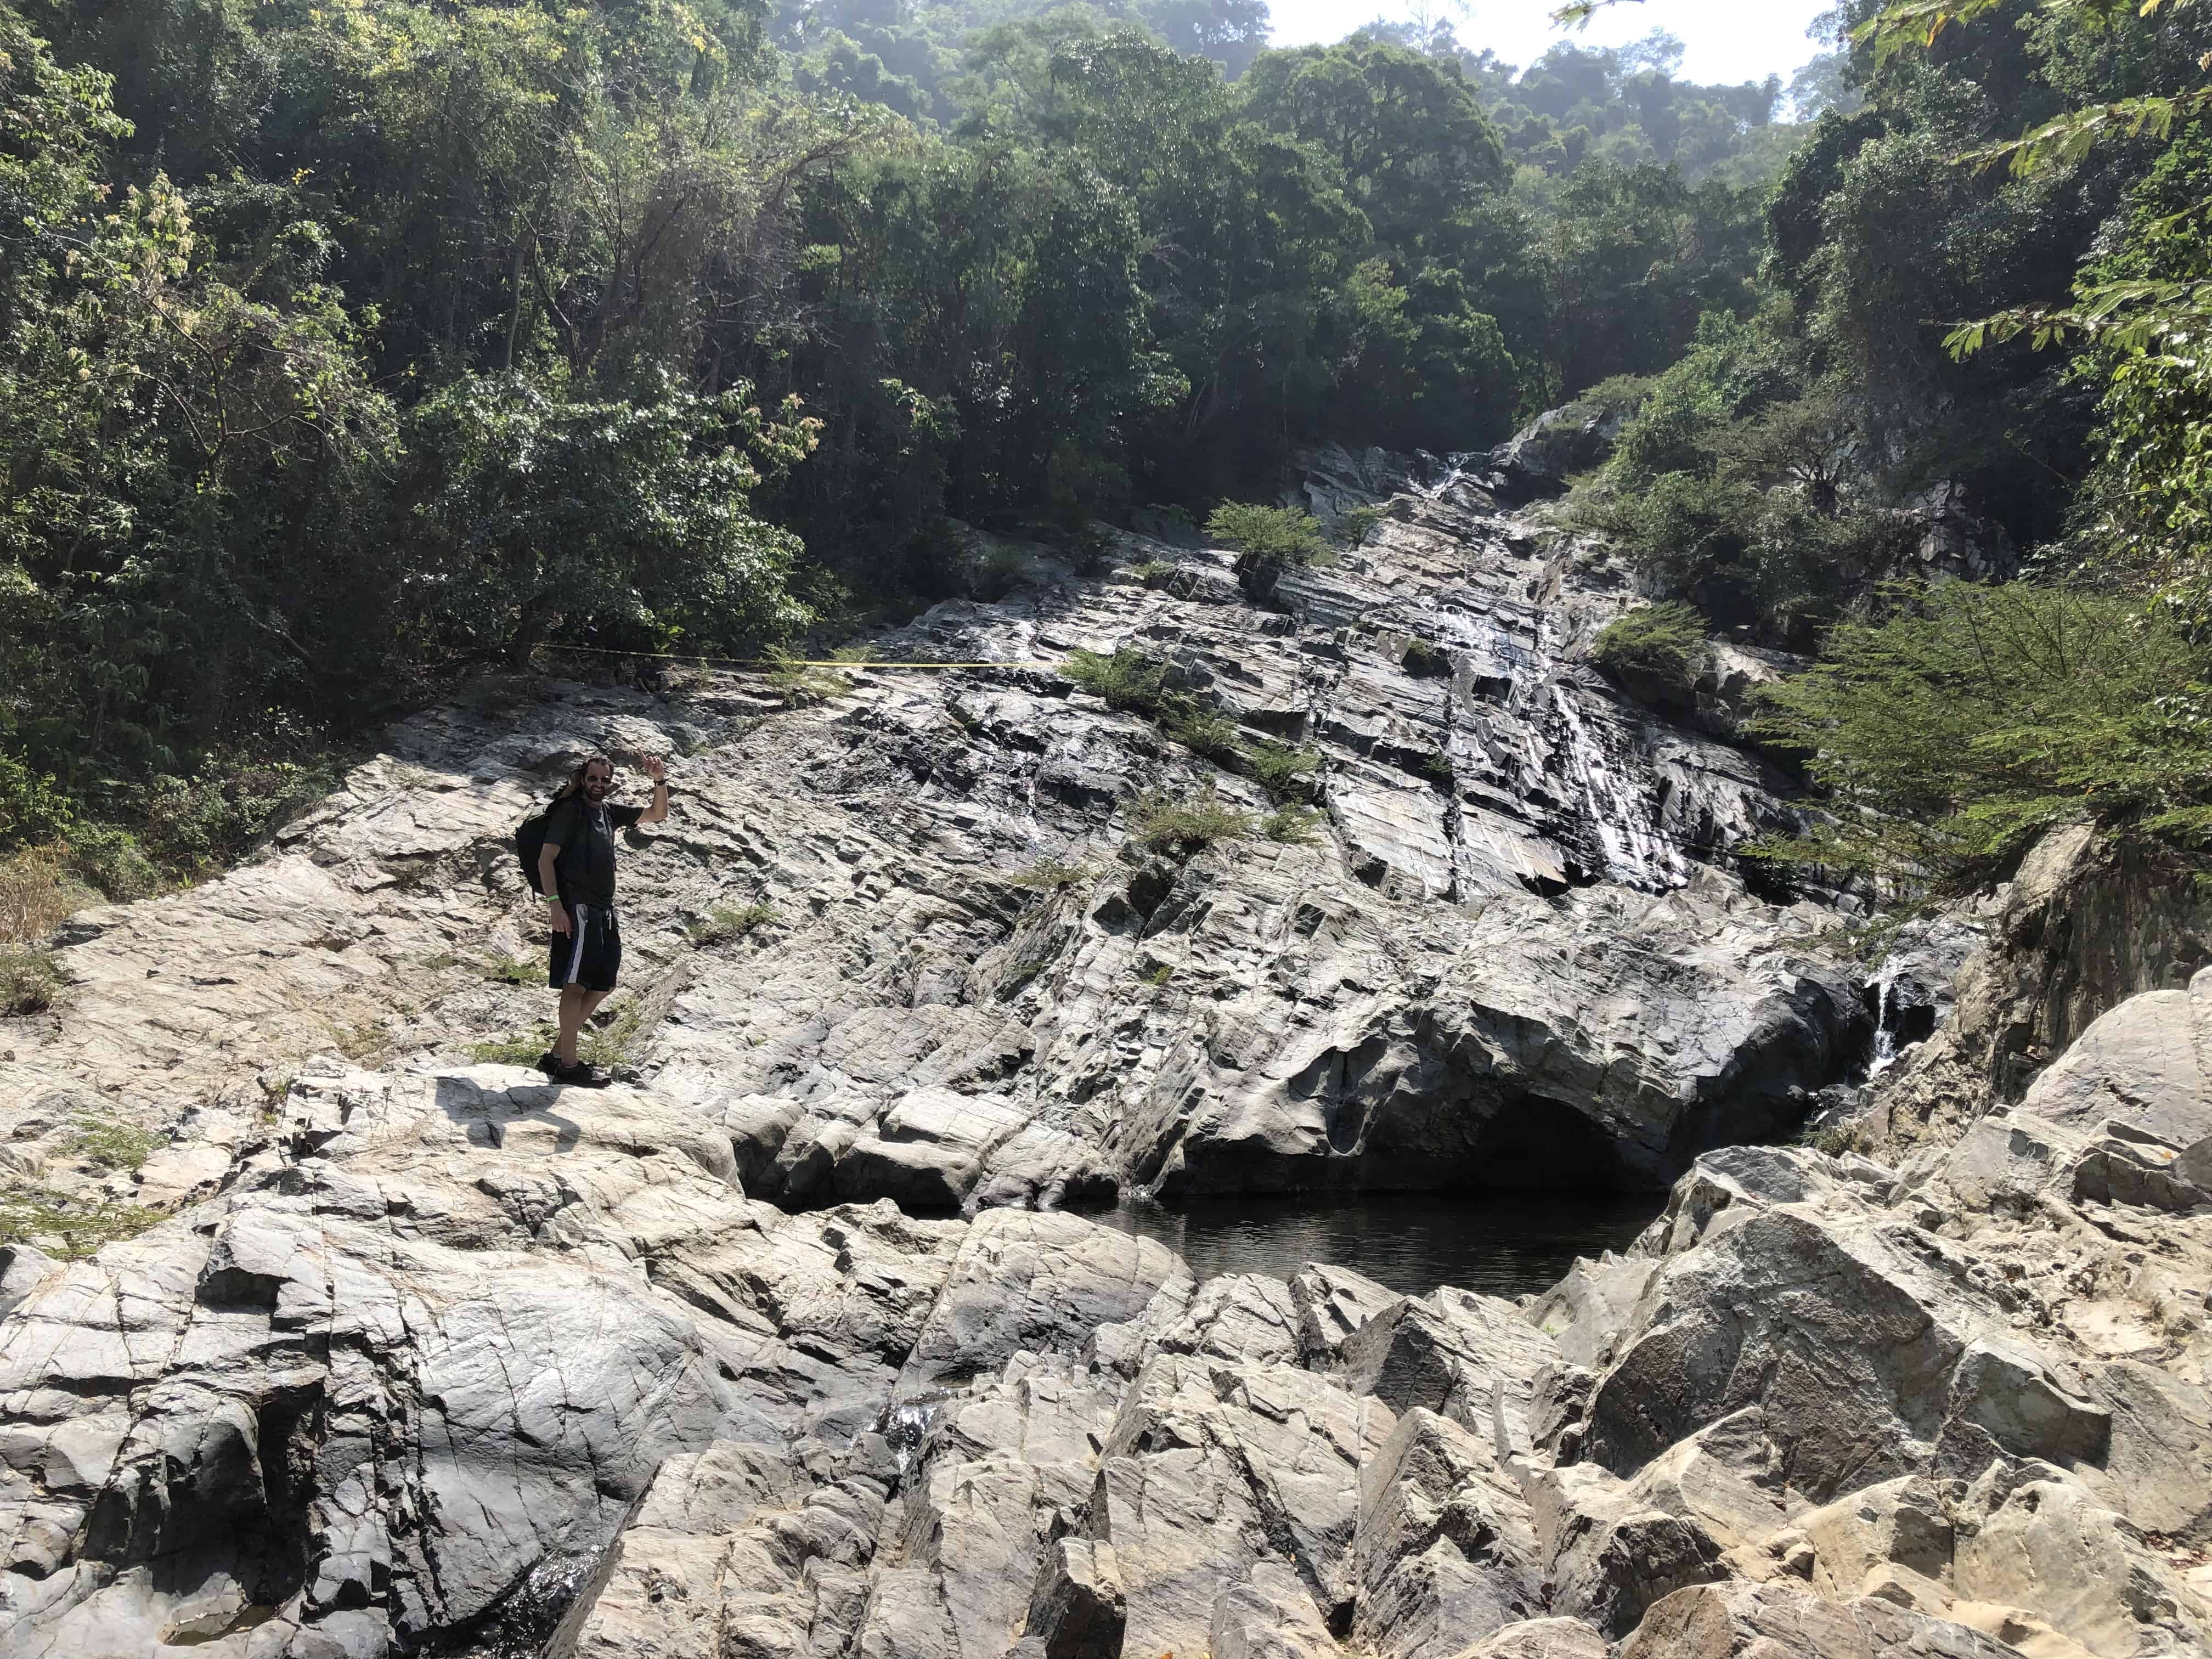 Climbing the rocks to more swimming holes at Quebrada Valencia, Magdalena, Colombia